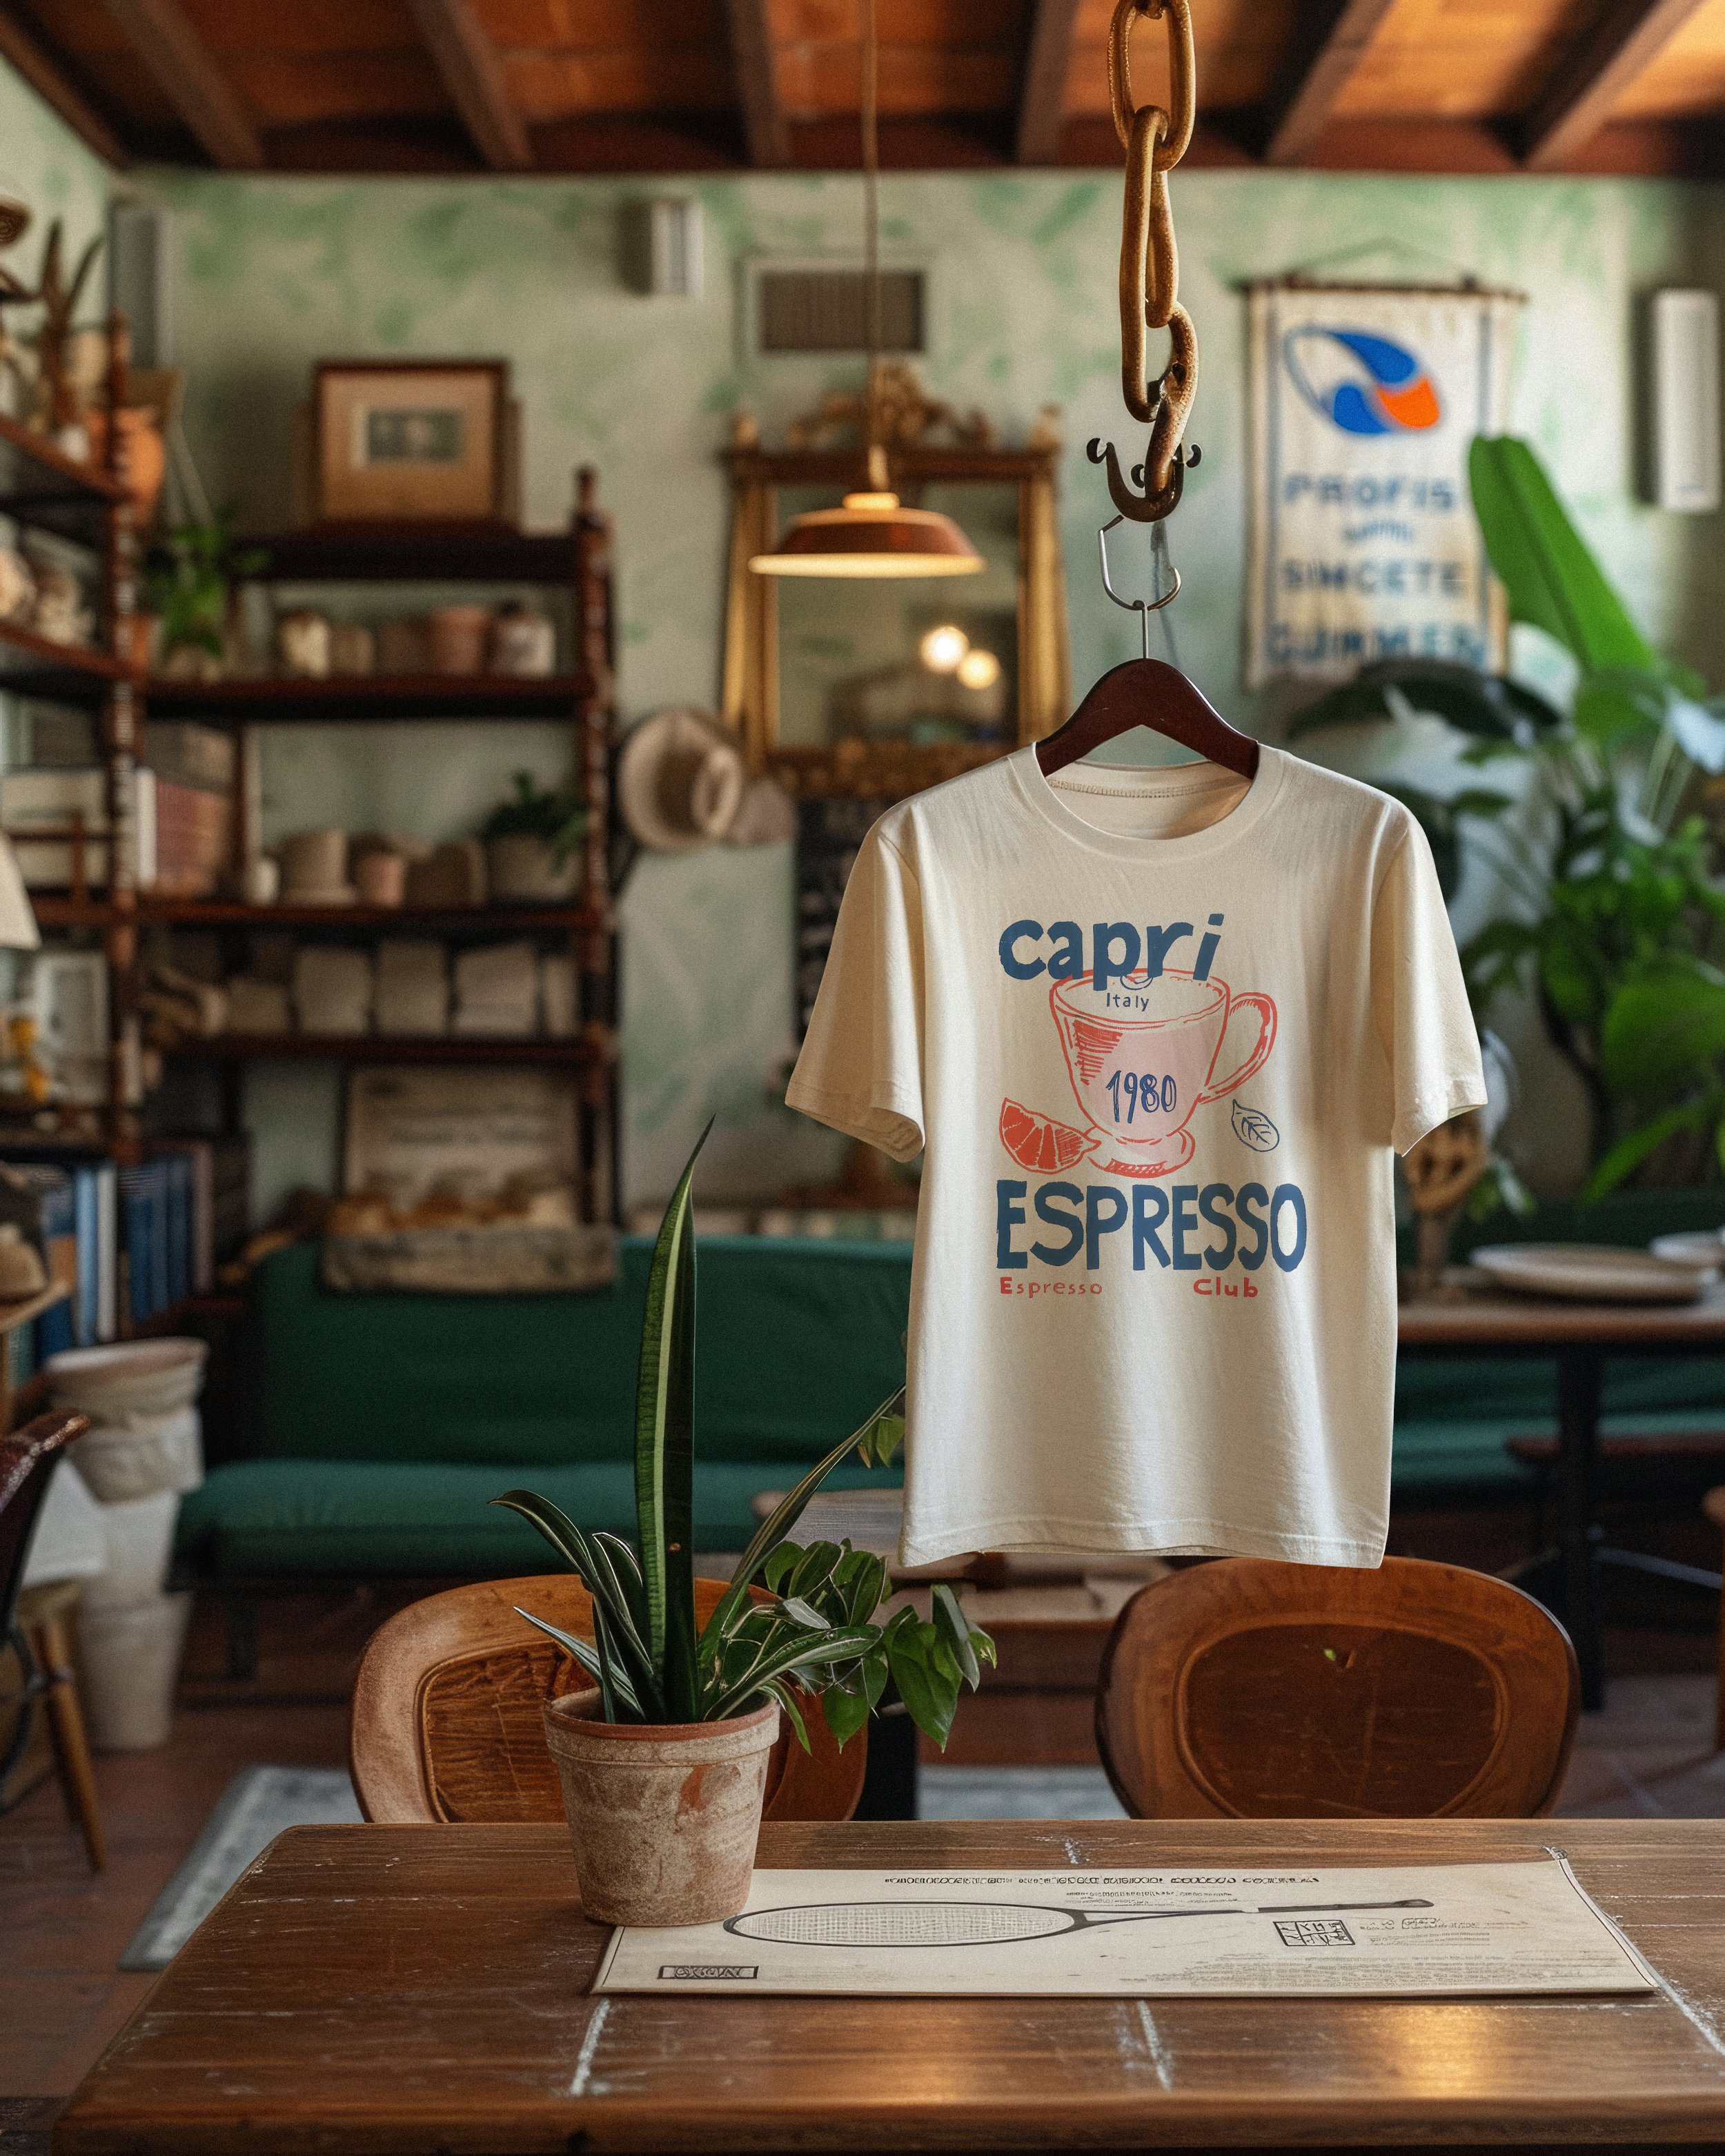 Capri Espresso Club1.jpg